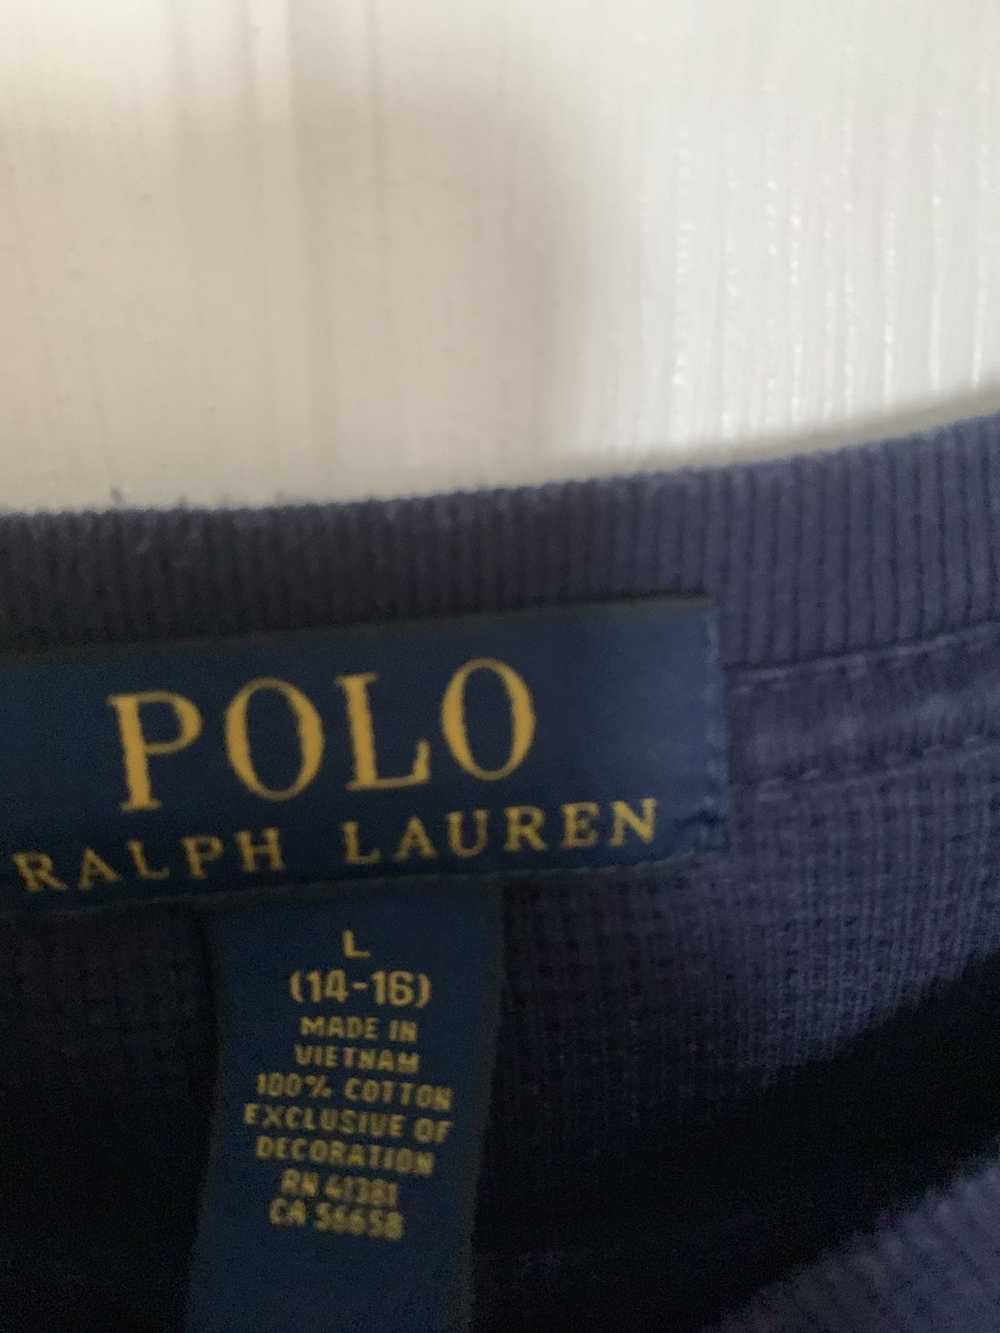 Polo Ralph Lauren Polo Ralph Lauren Long Sleeve - image 3